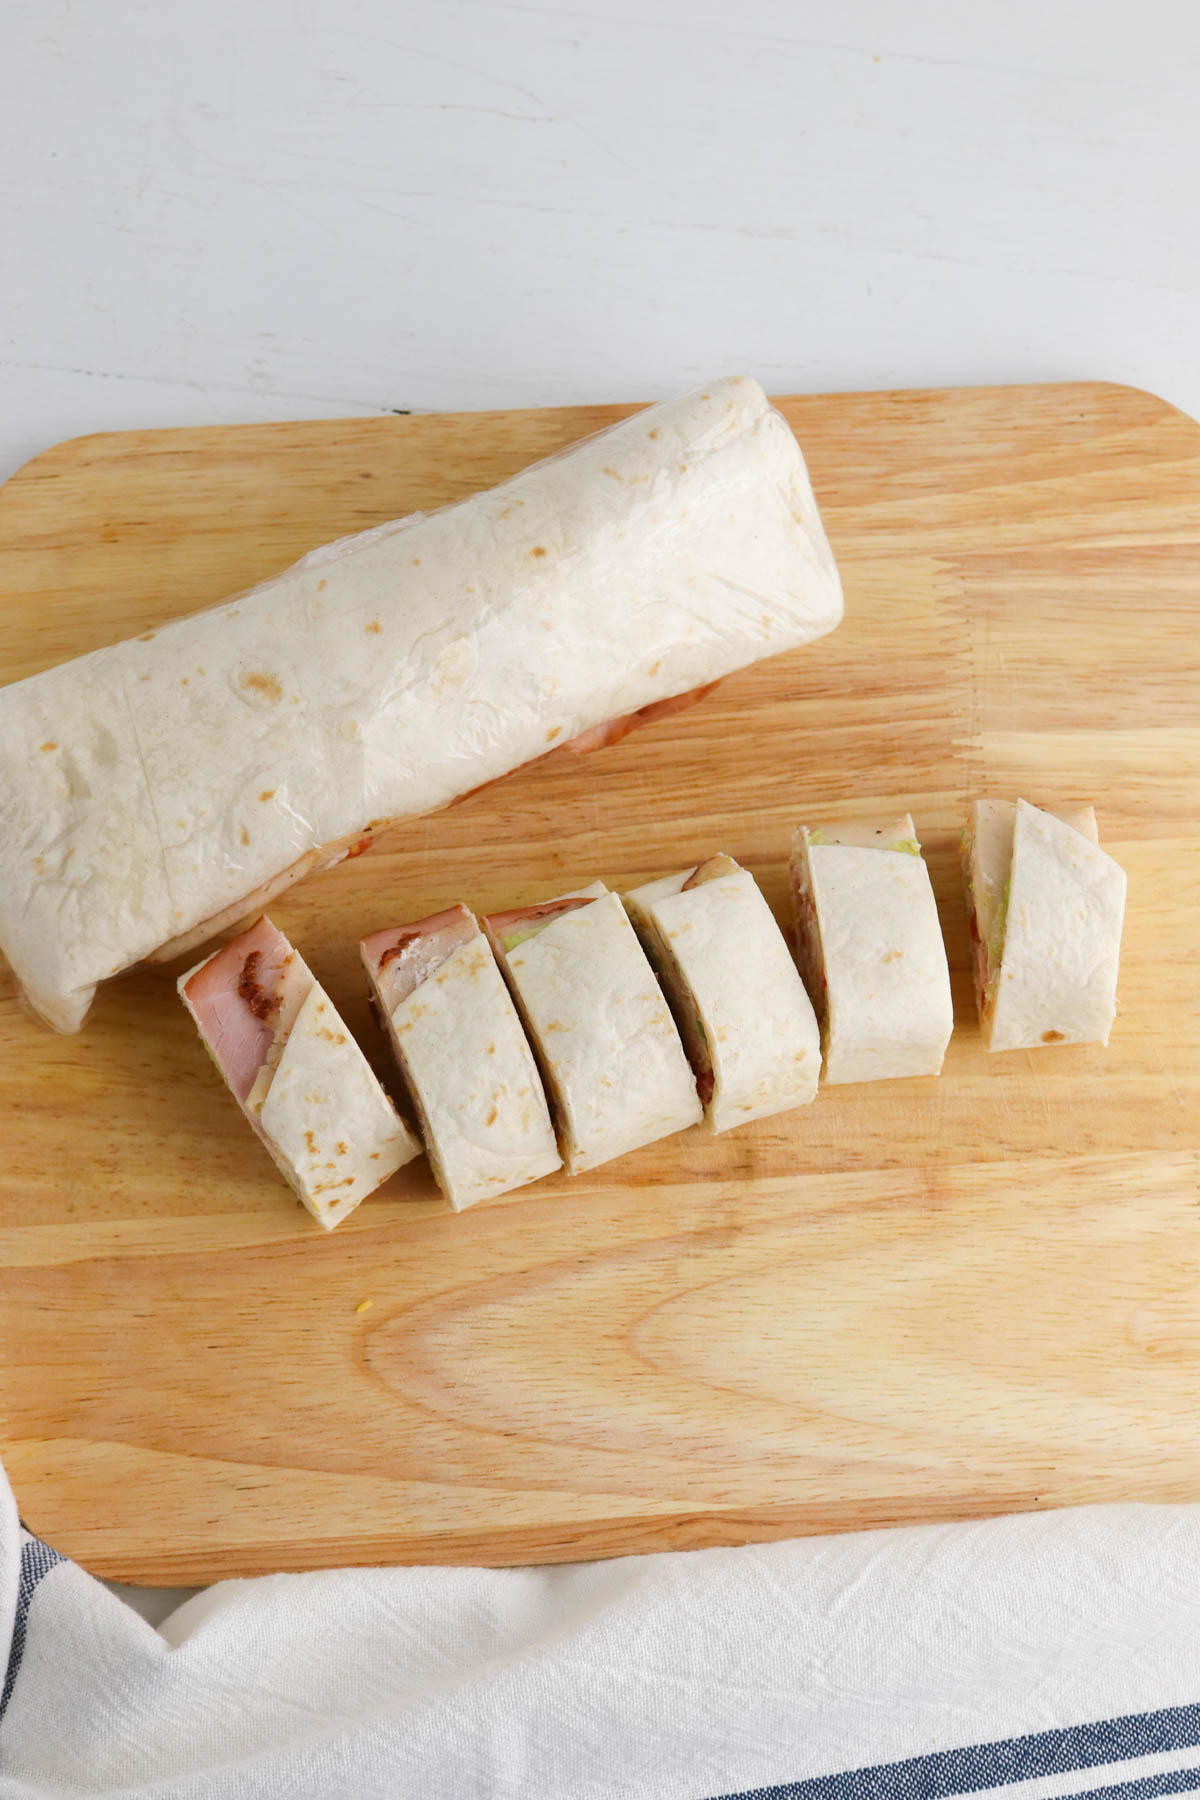 A sliced wrap sandwich on a wooden cutting board.